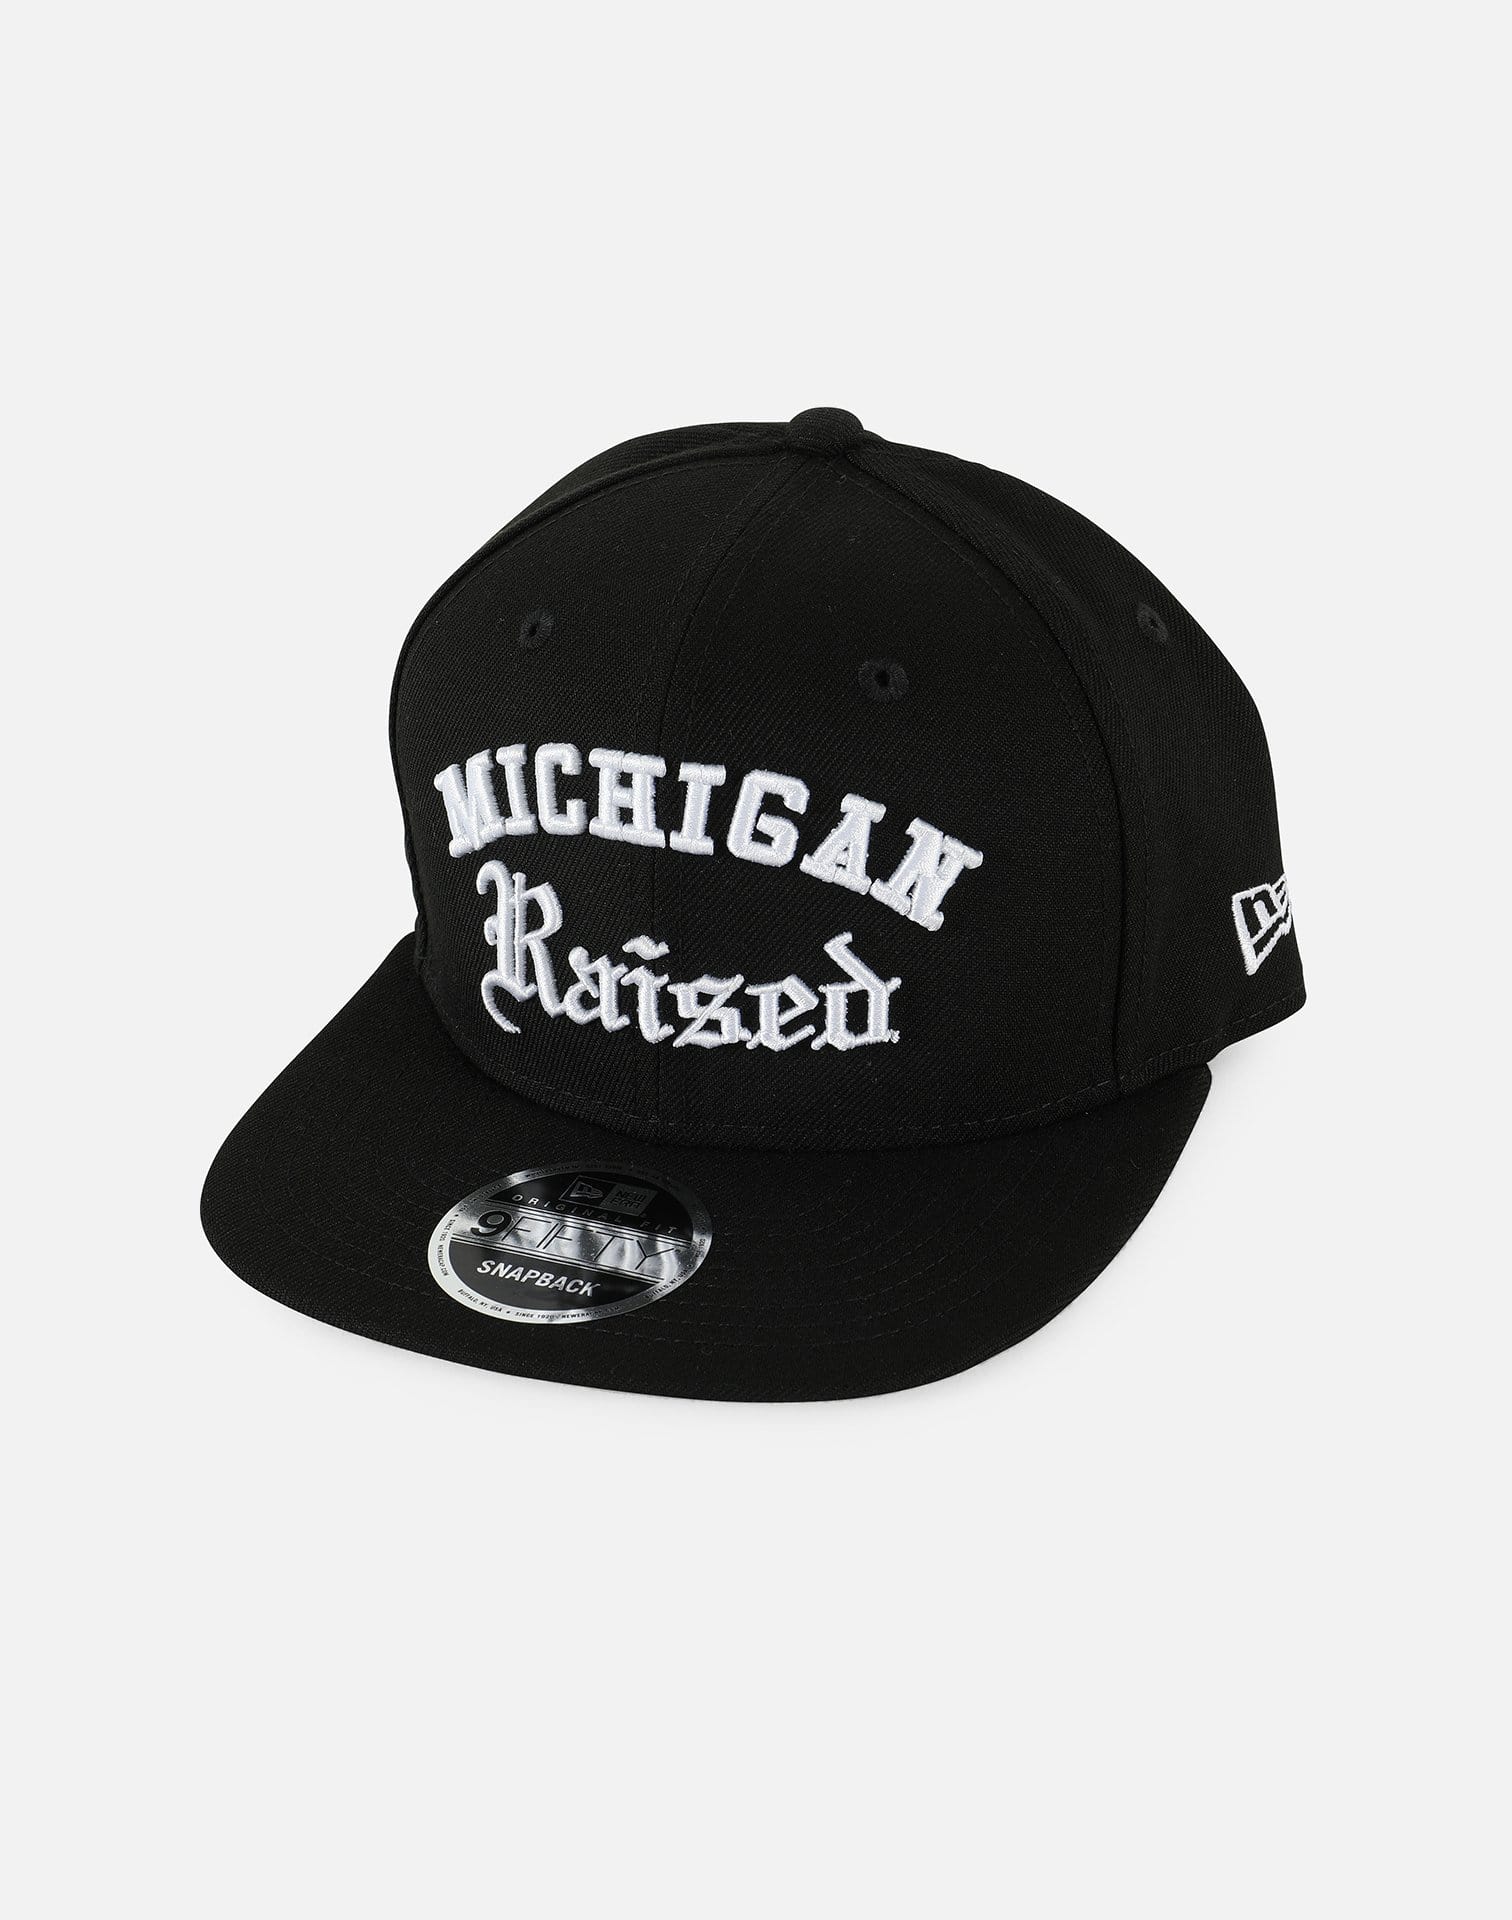 New Era Michigan Raised Deluxe Snapback Hat